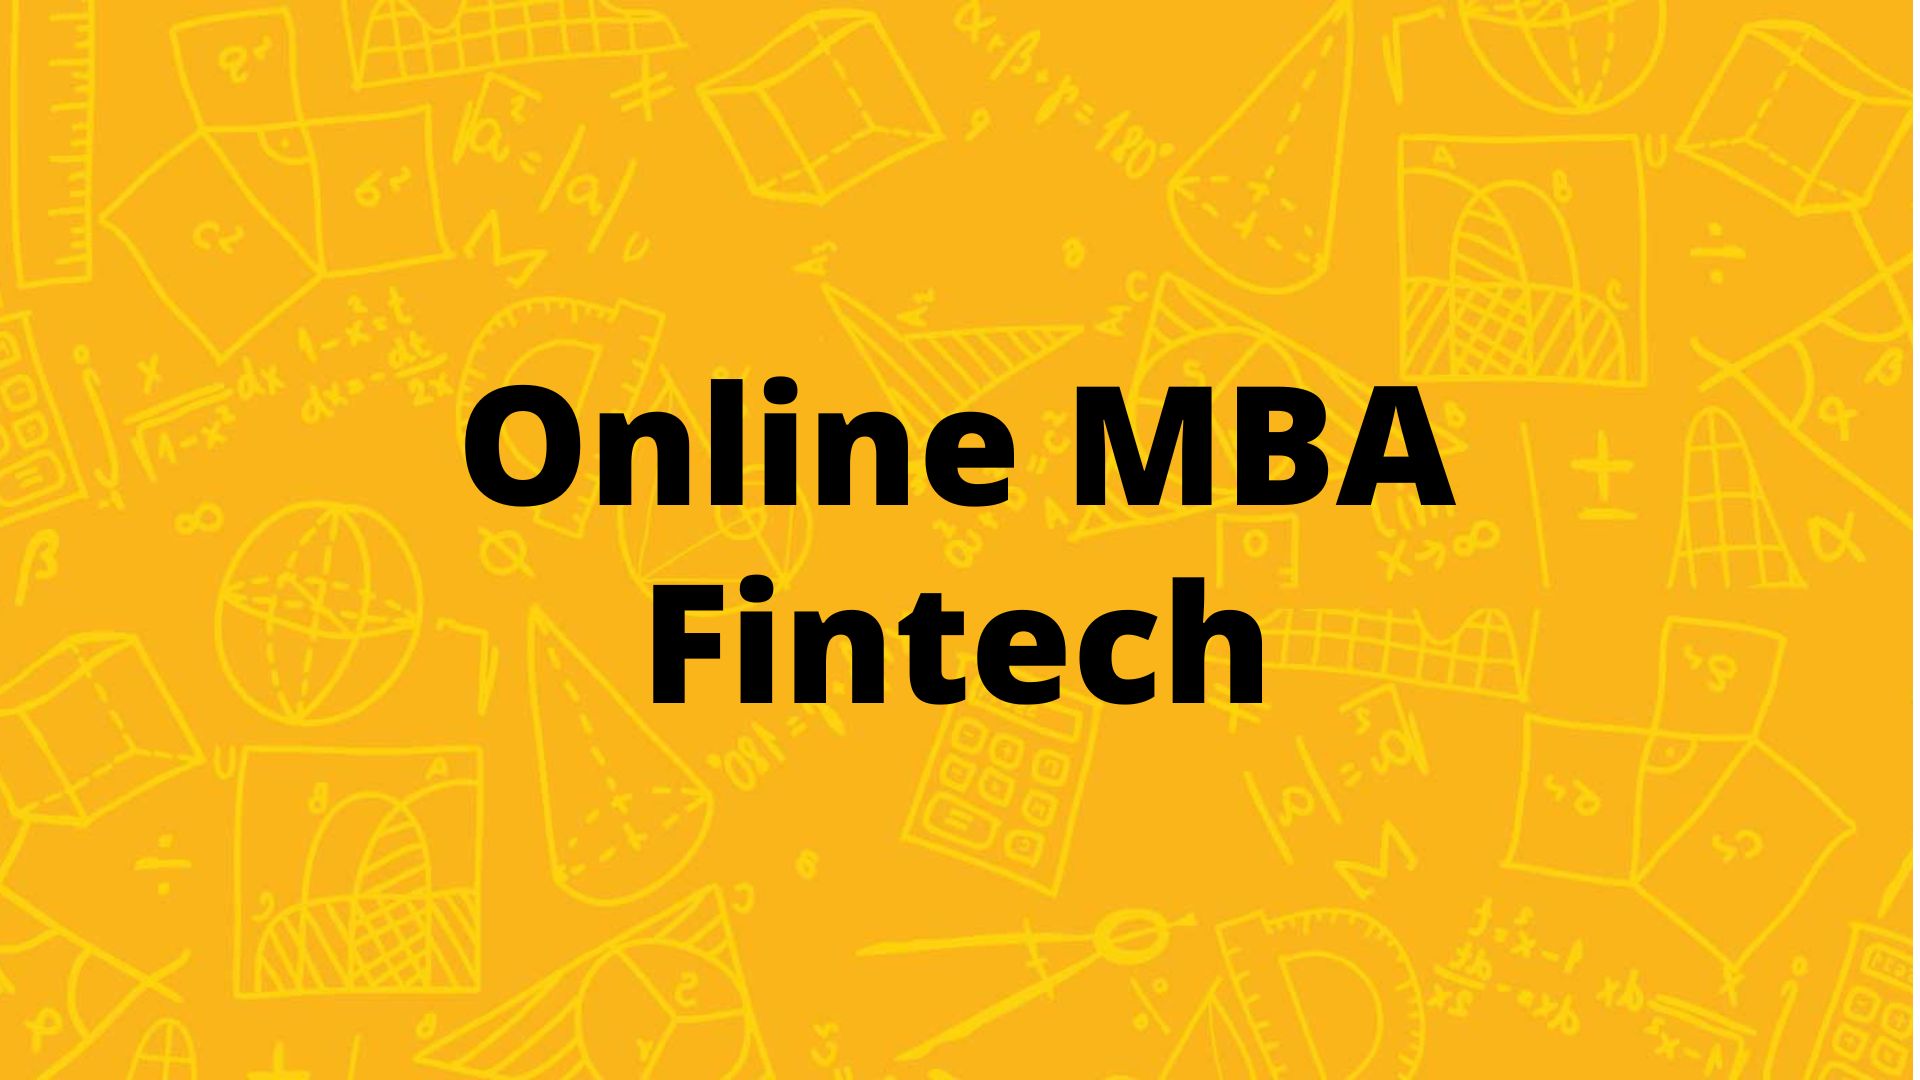 Online MBA Fintech